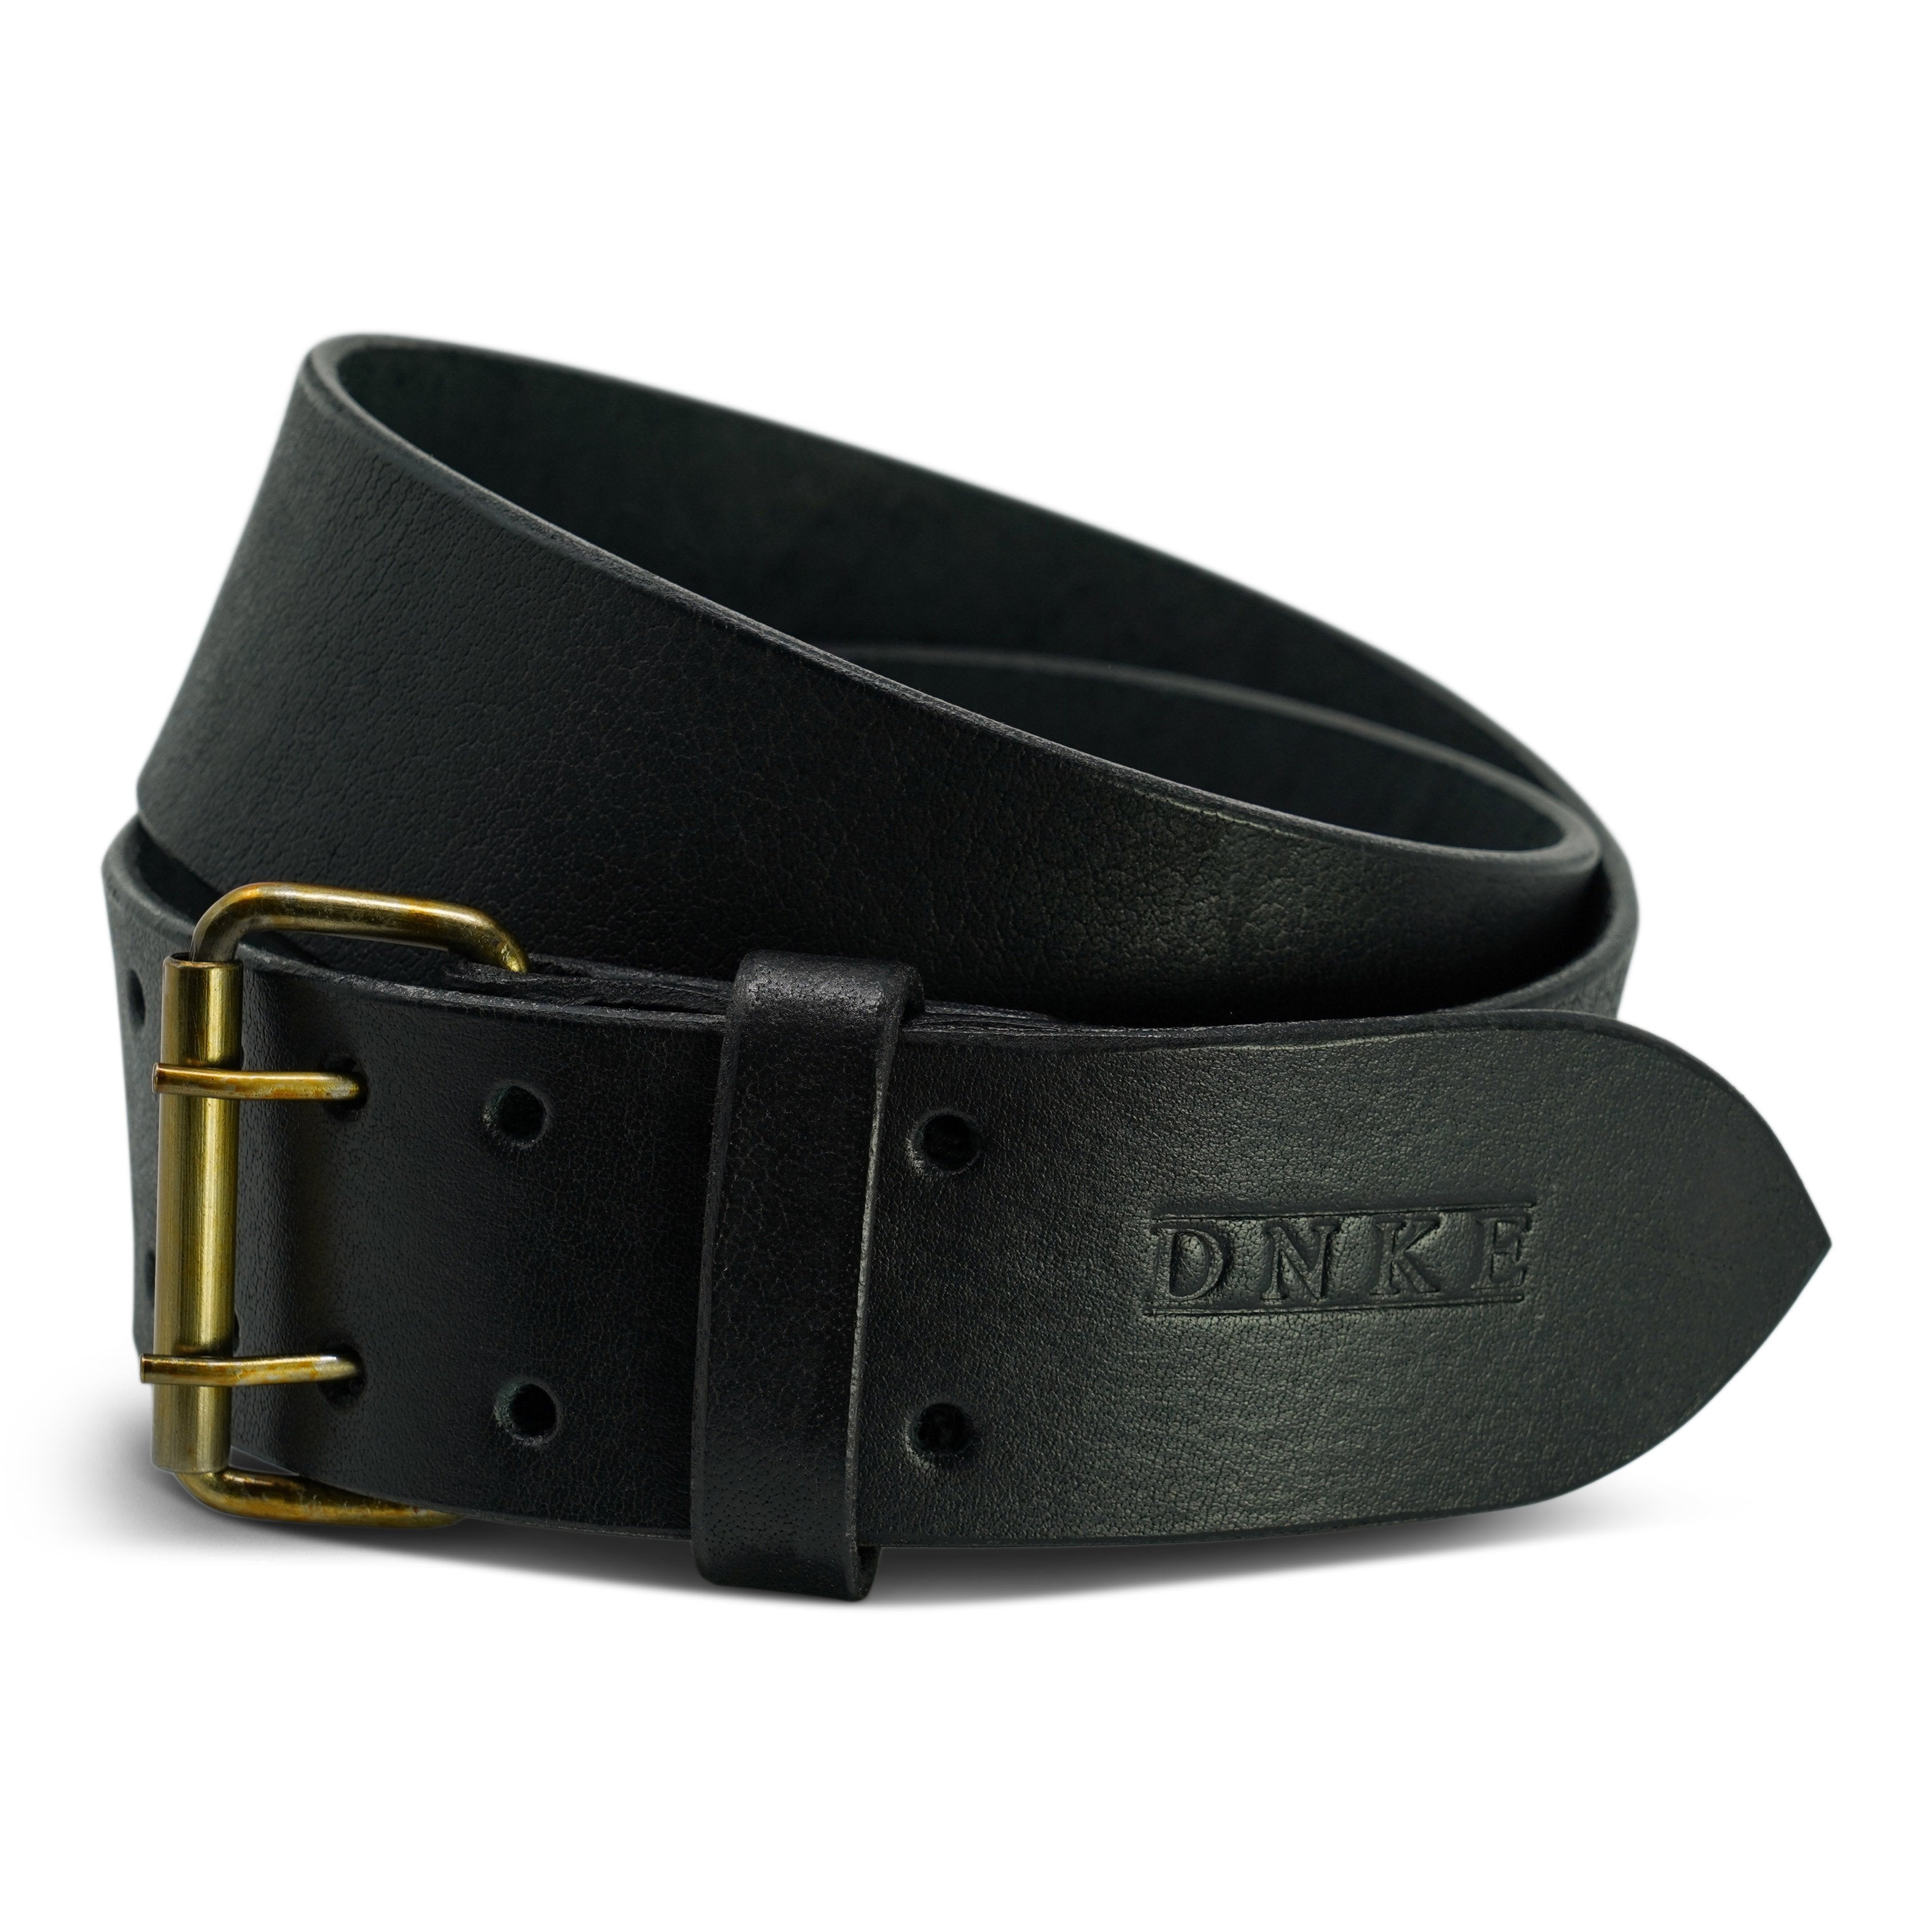 Double Prong Kilt Belt - Black Leather